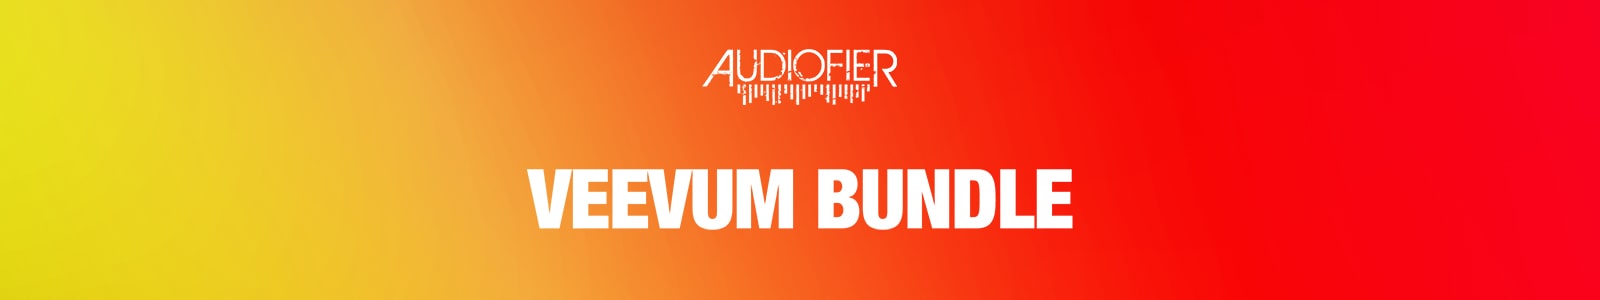 Audiofier Veevum Bundle